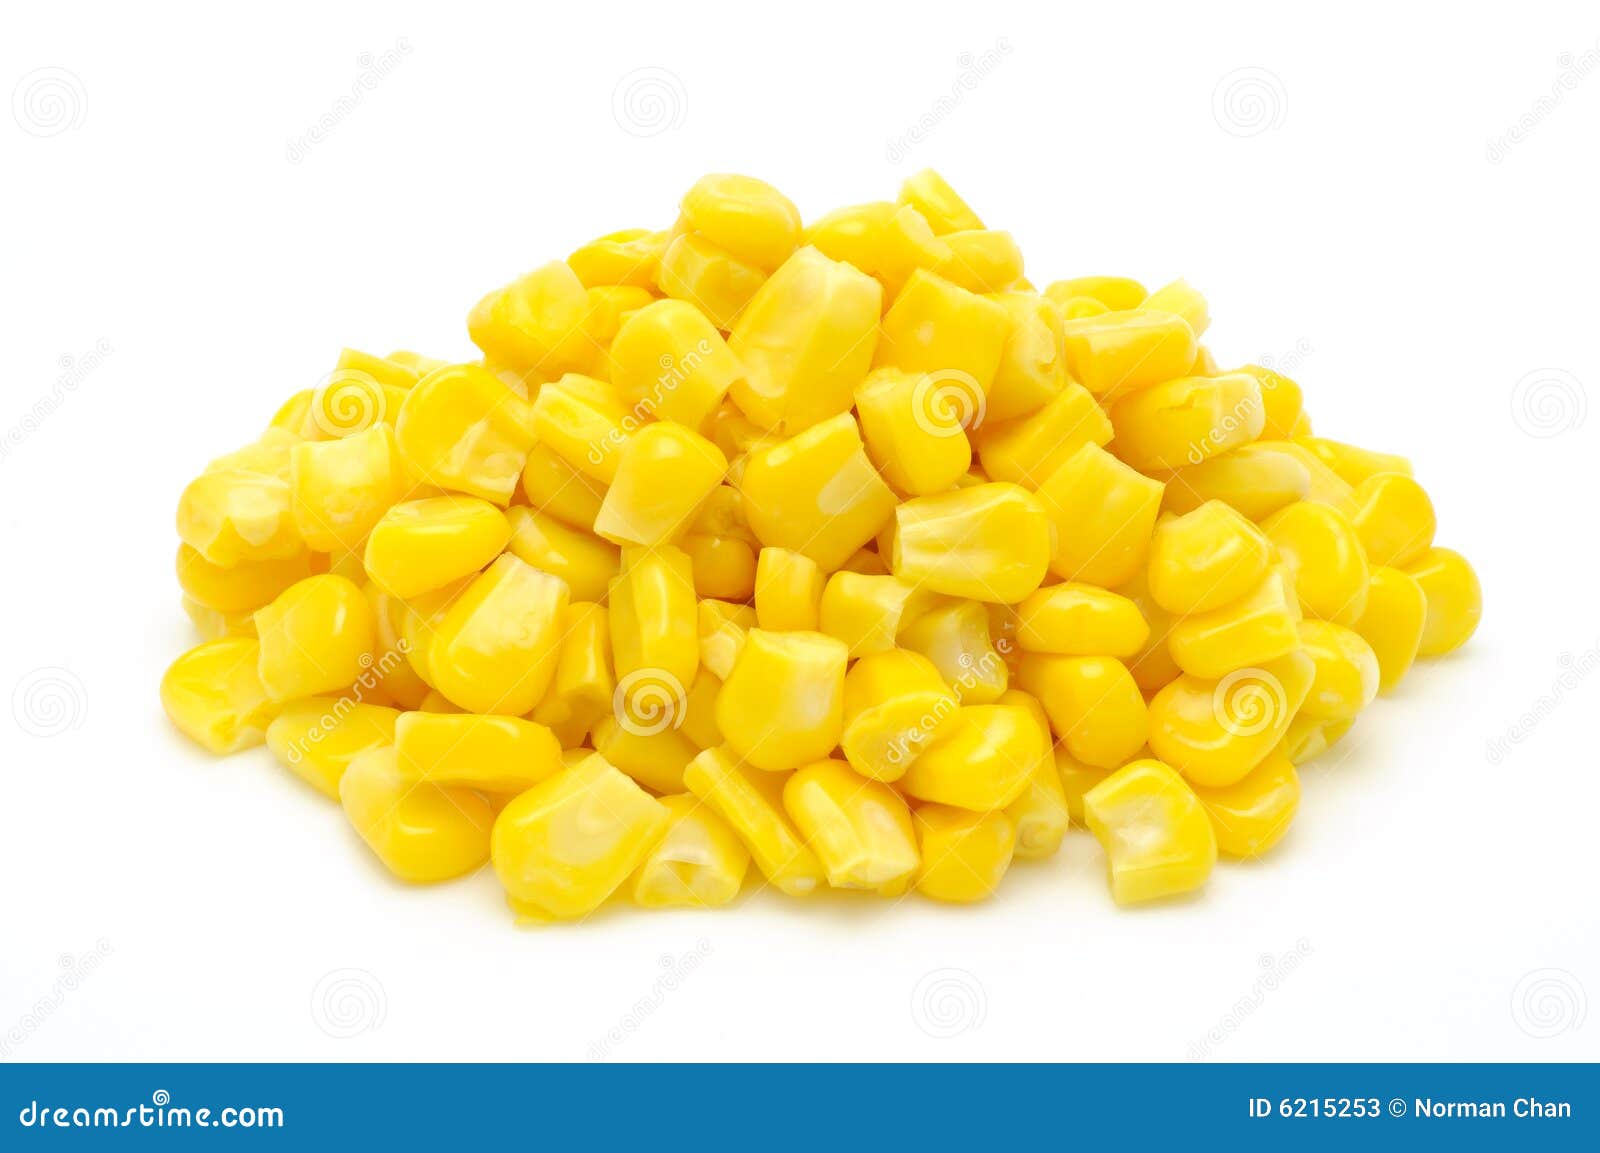 stack of sweetcorn kernels